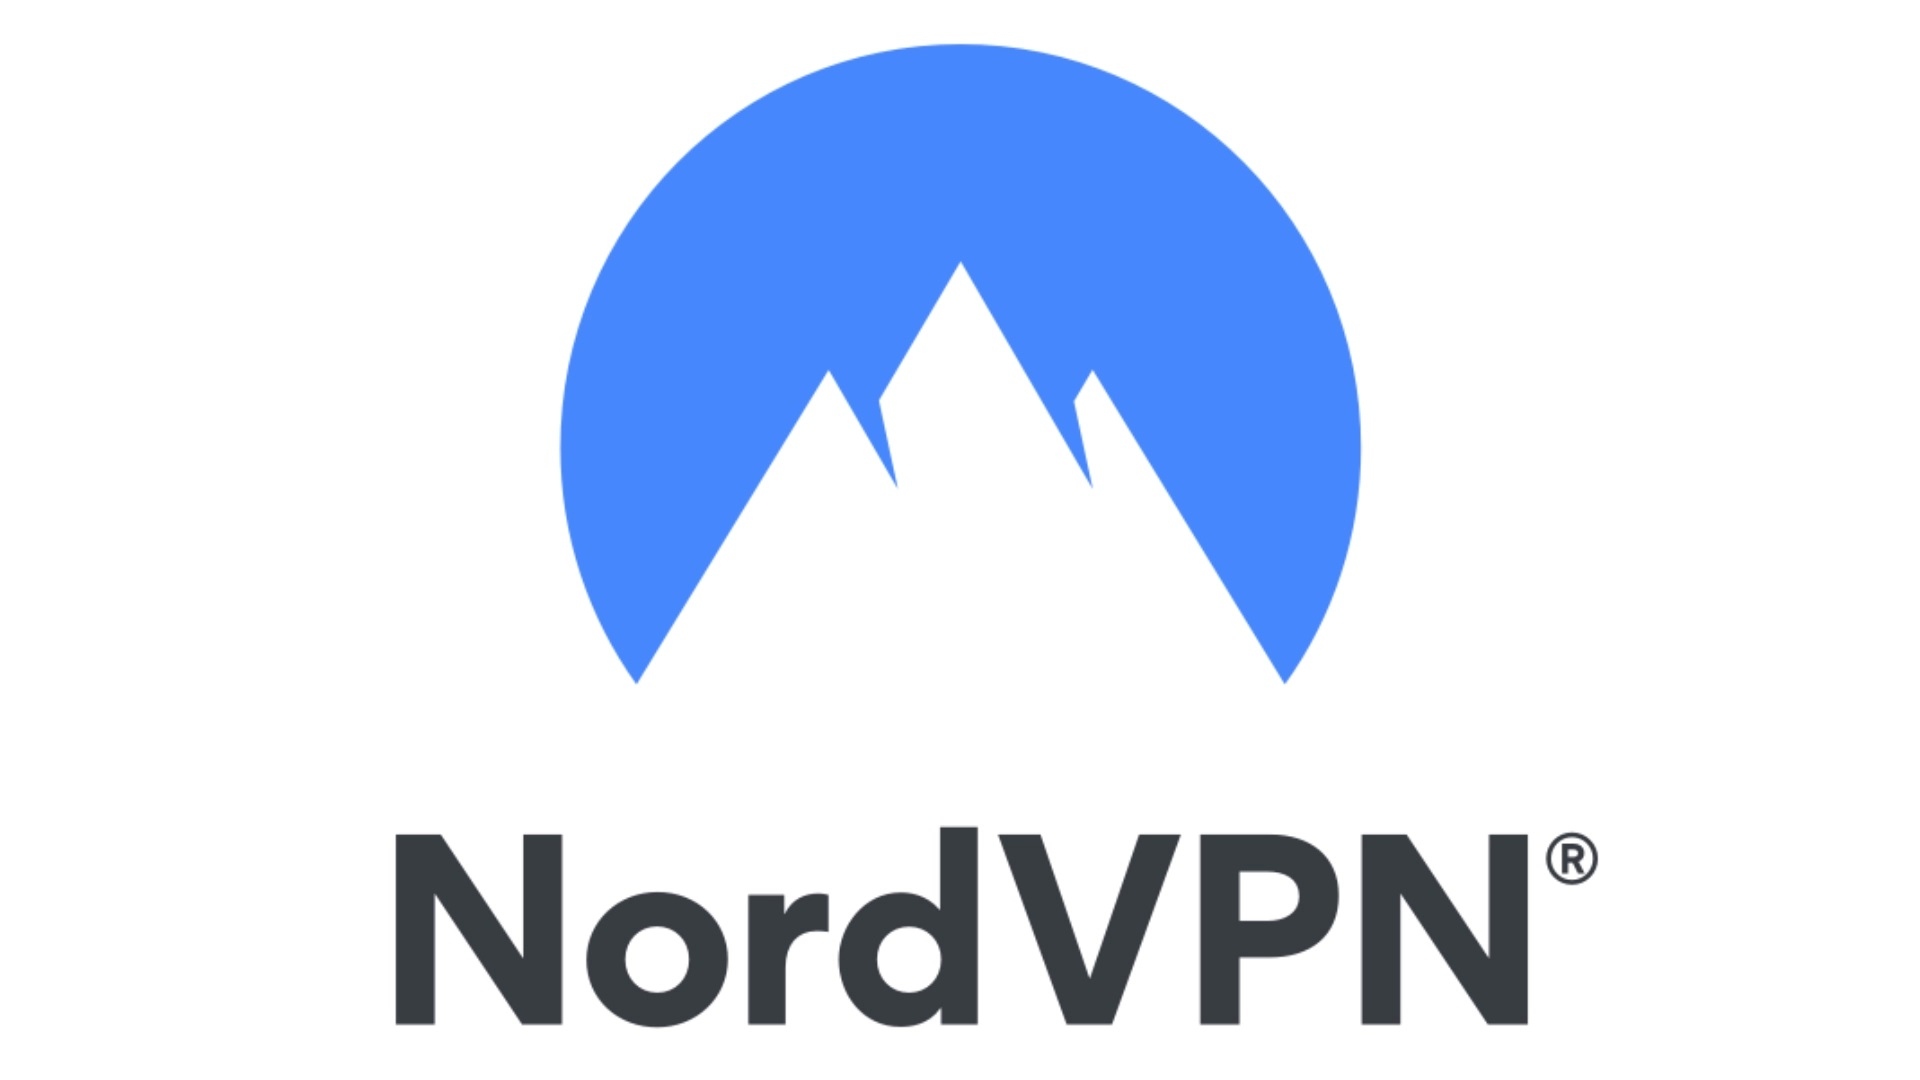 Best Firefox VPN: NordVPN.  The image shows the company logo.